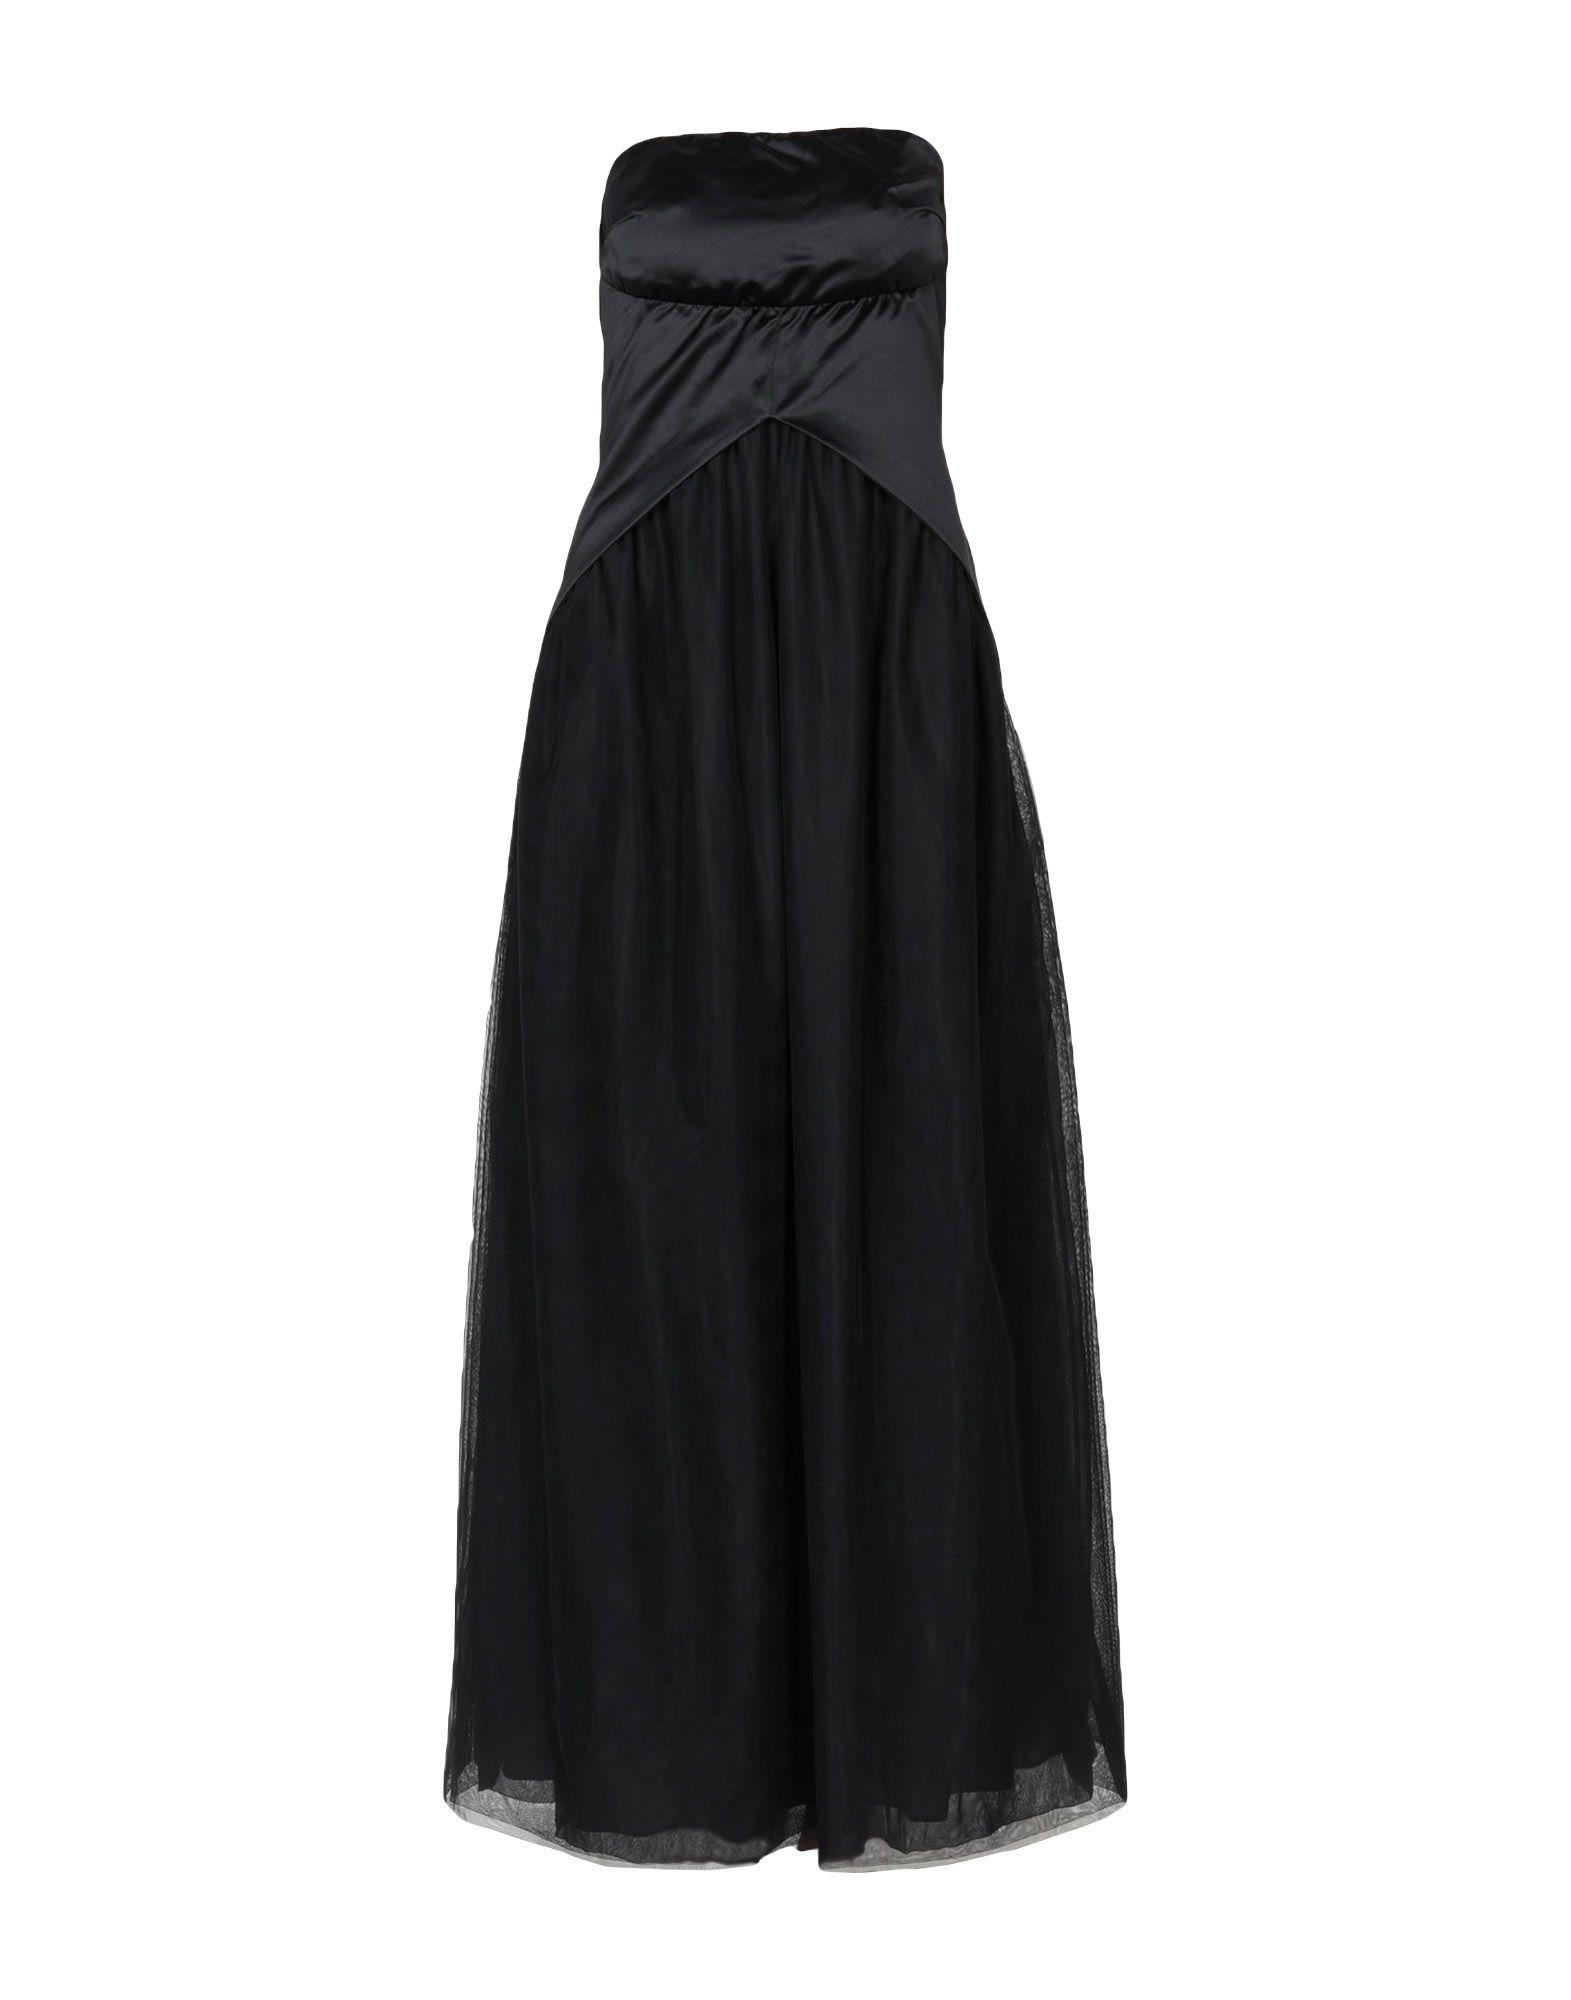 Brunello Cucinelli Tulle Long Dress in Black - Lyst